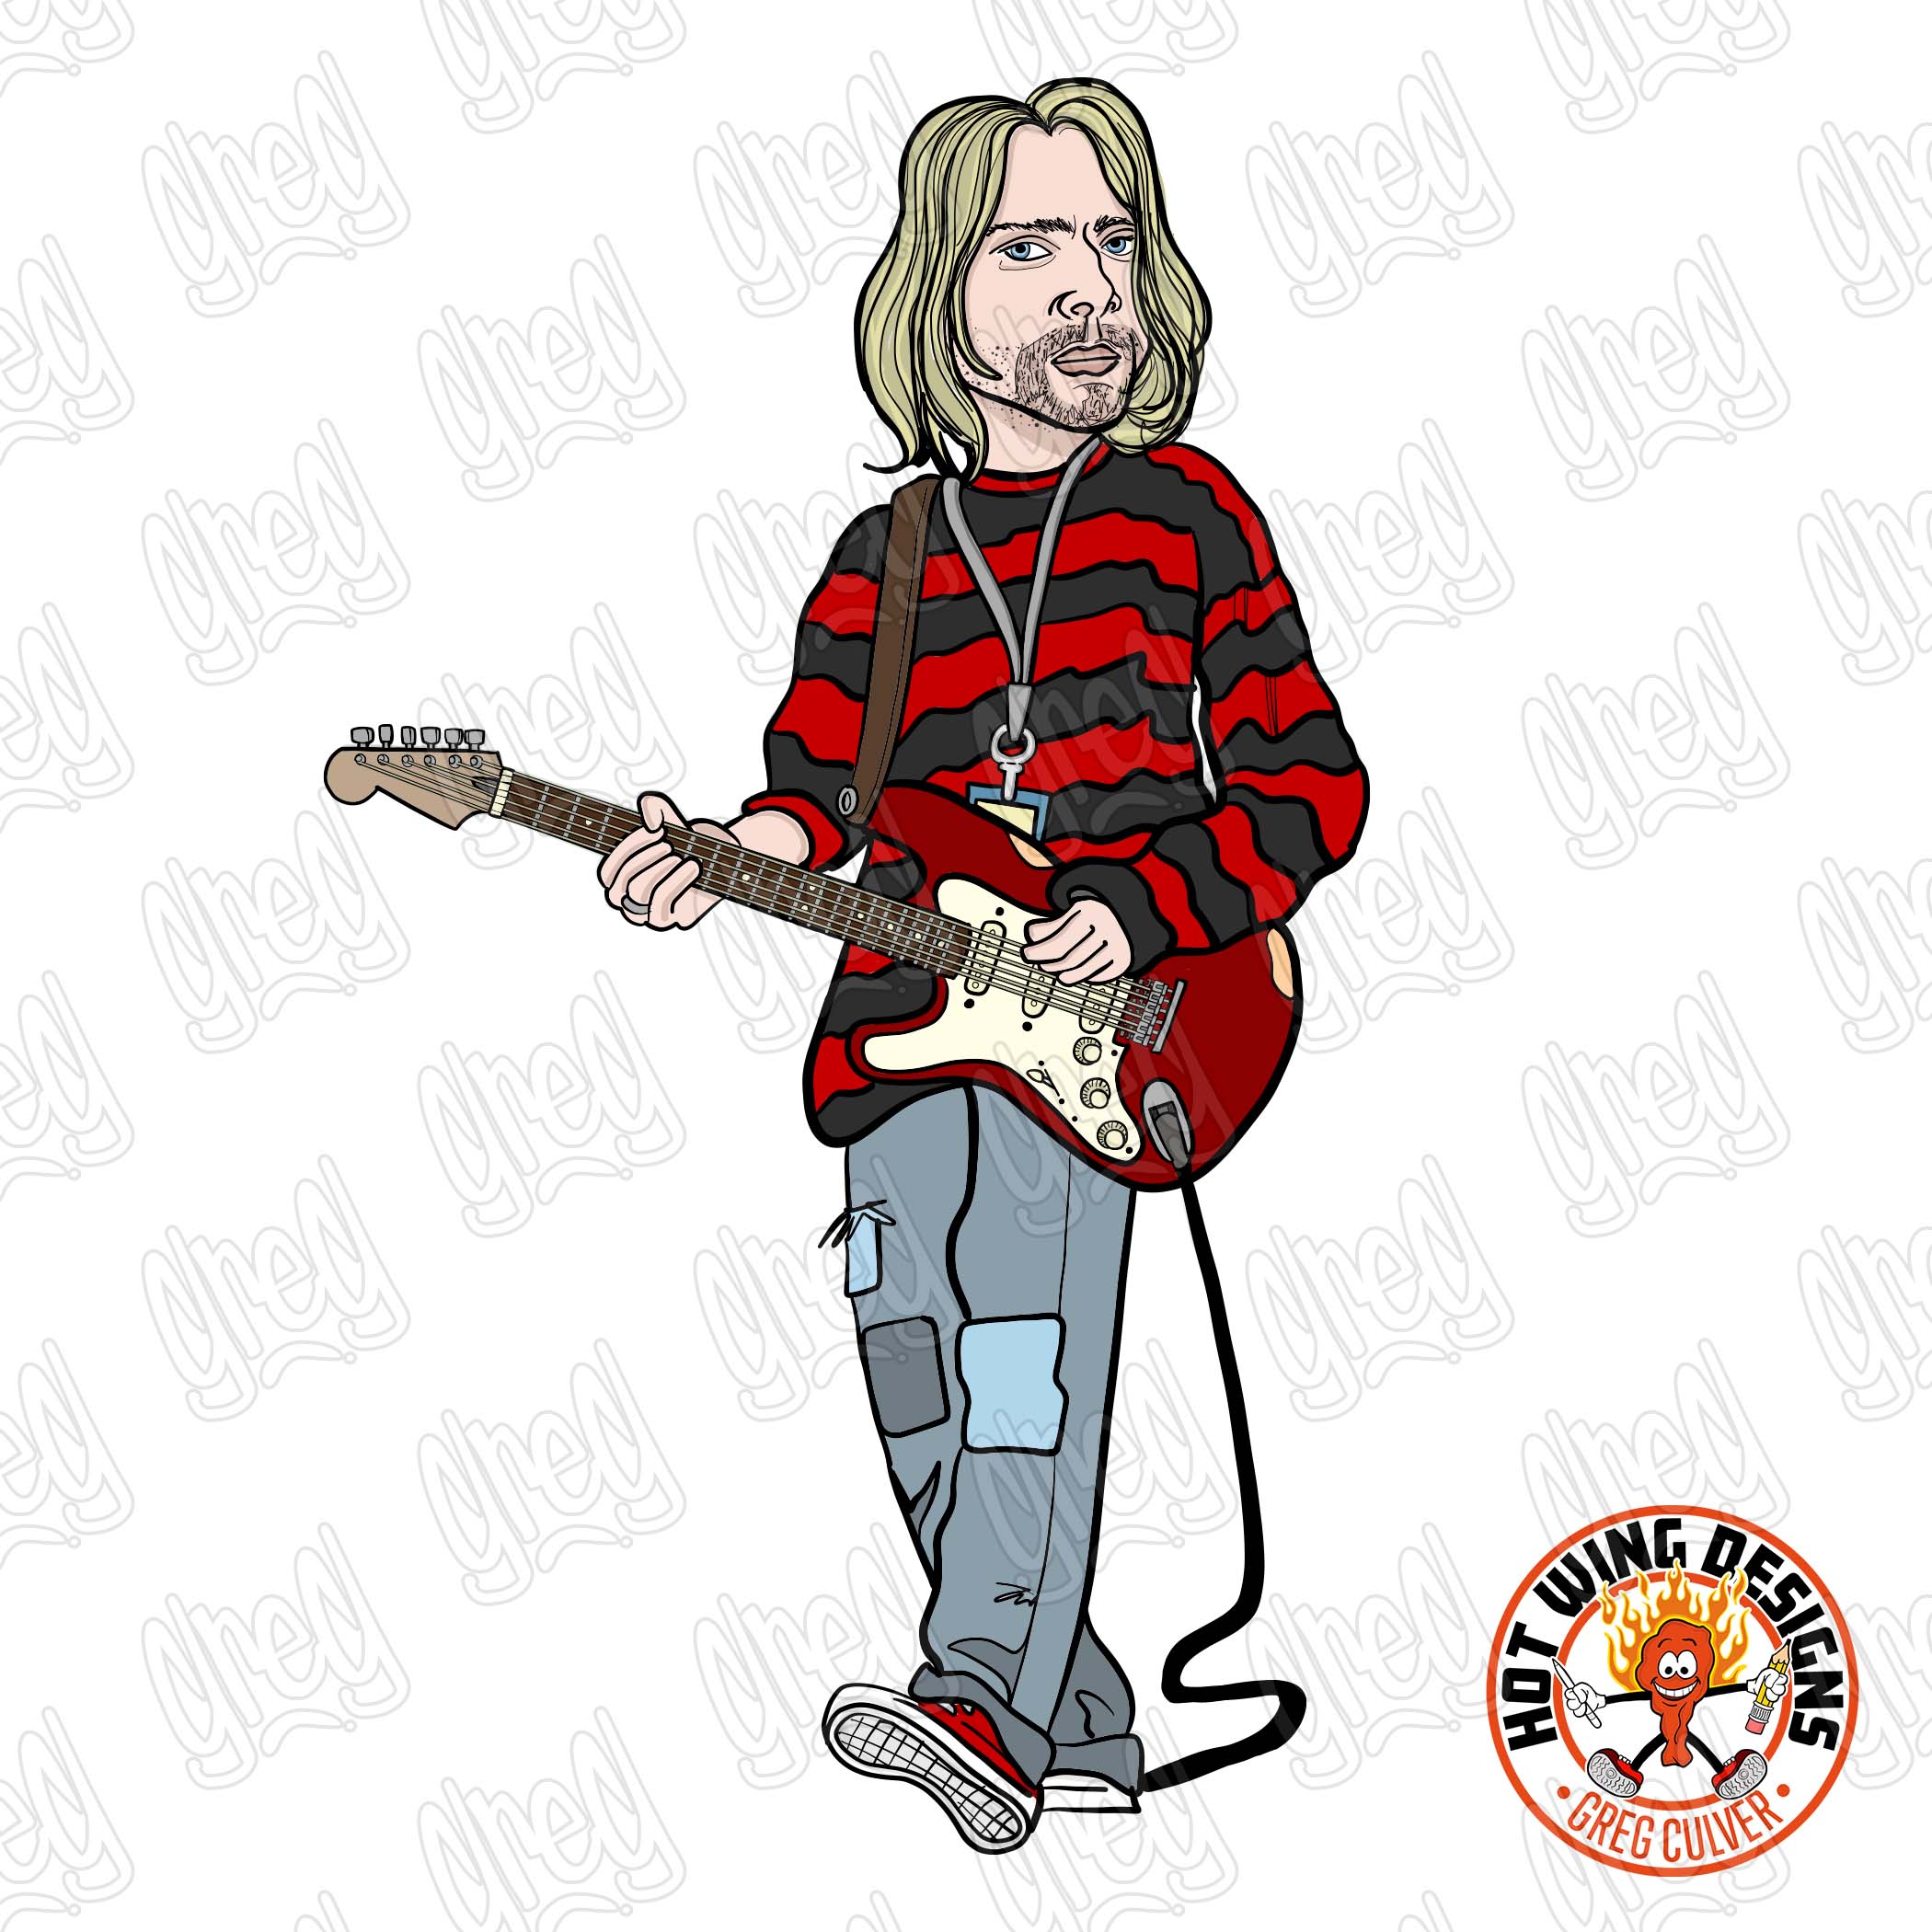 Kurt Cobain cartoon by Greg Culver and Hot Wing Designs